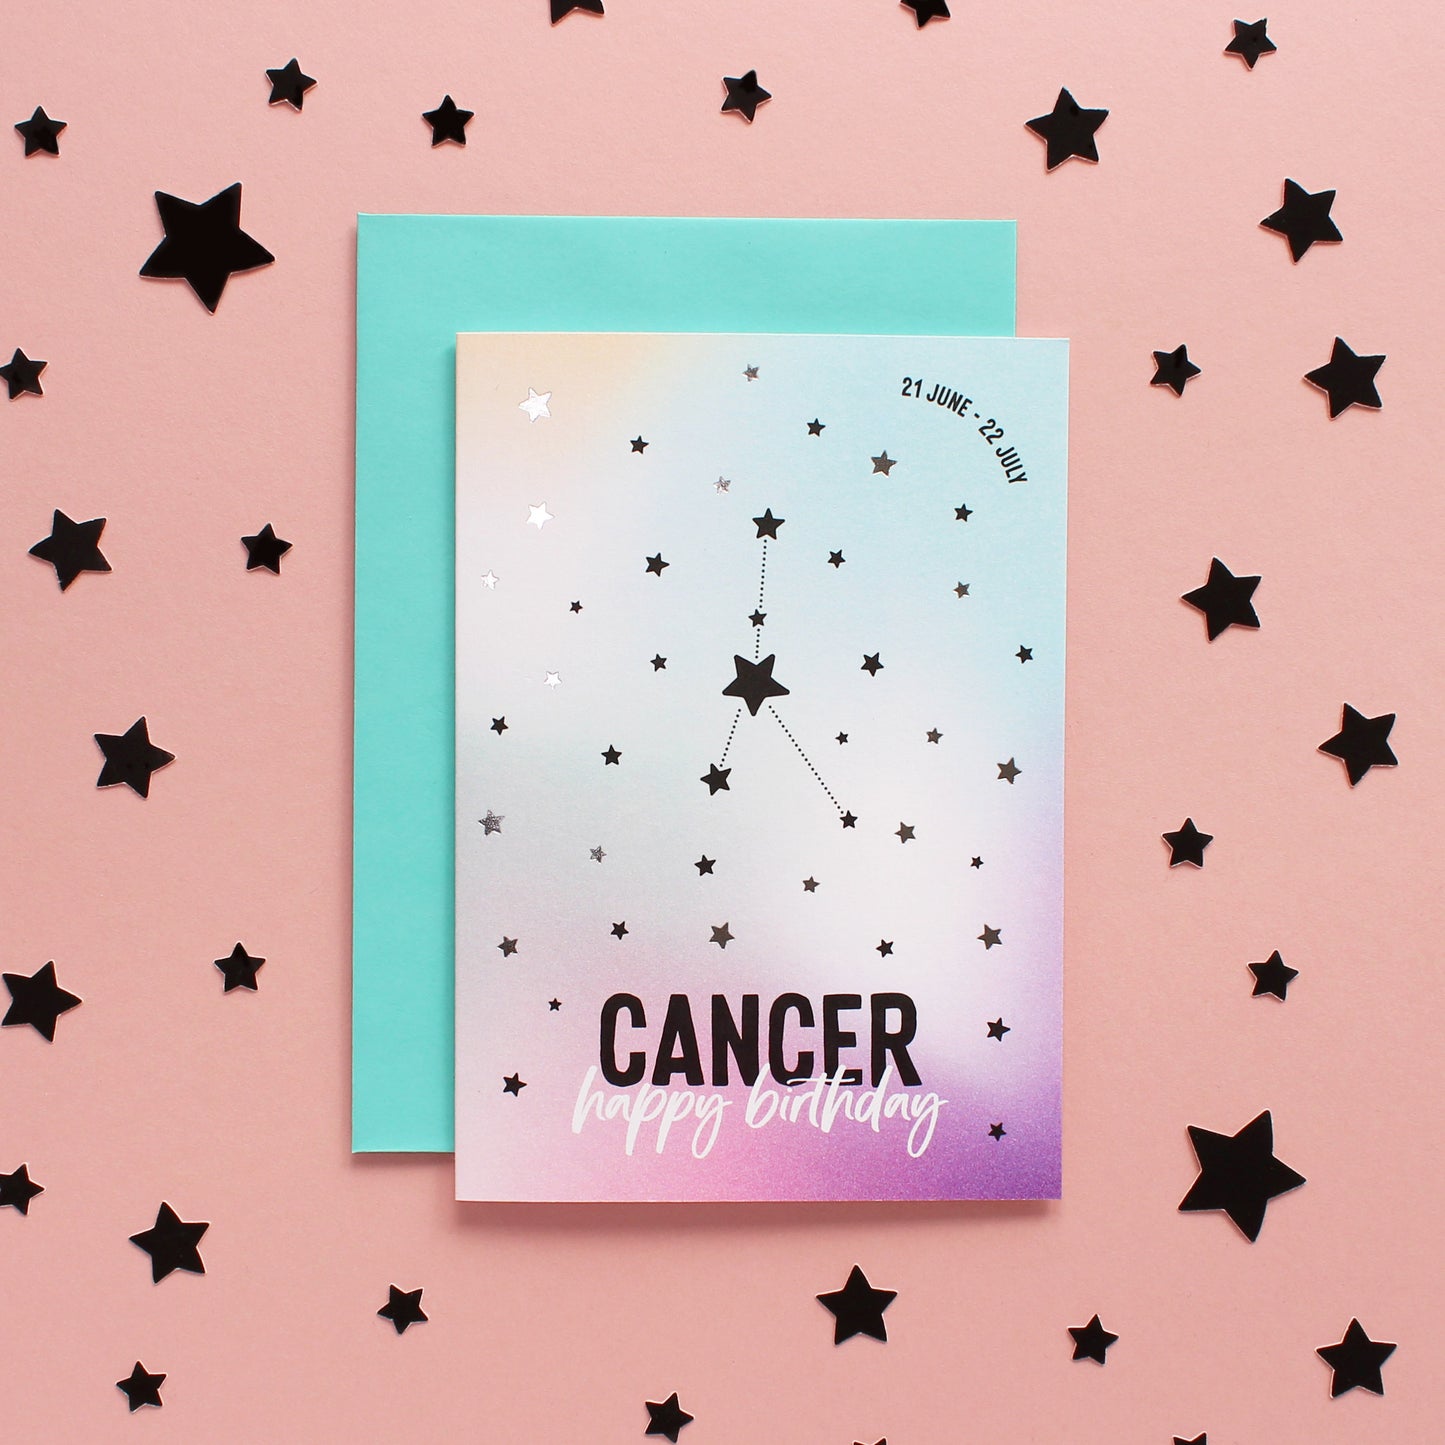 Cancer birthday card